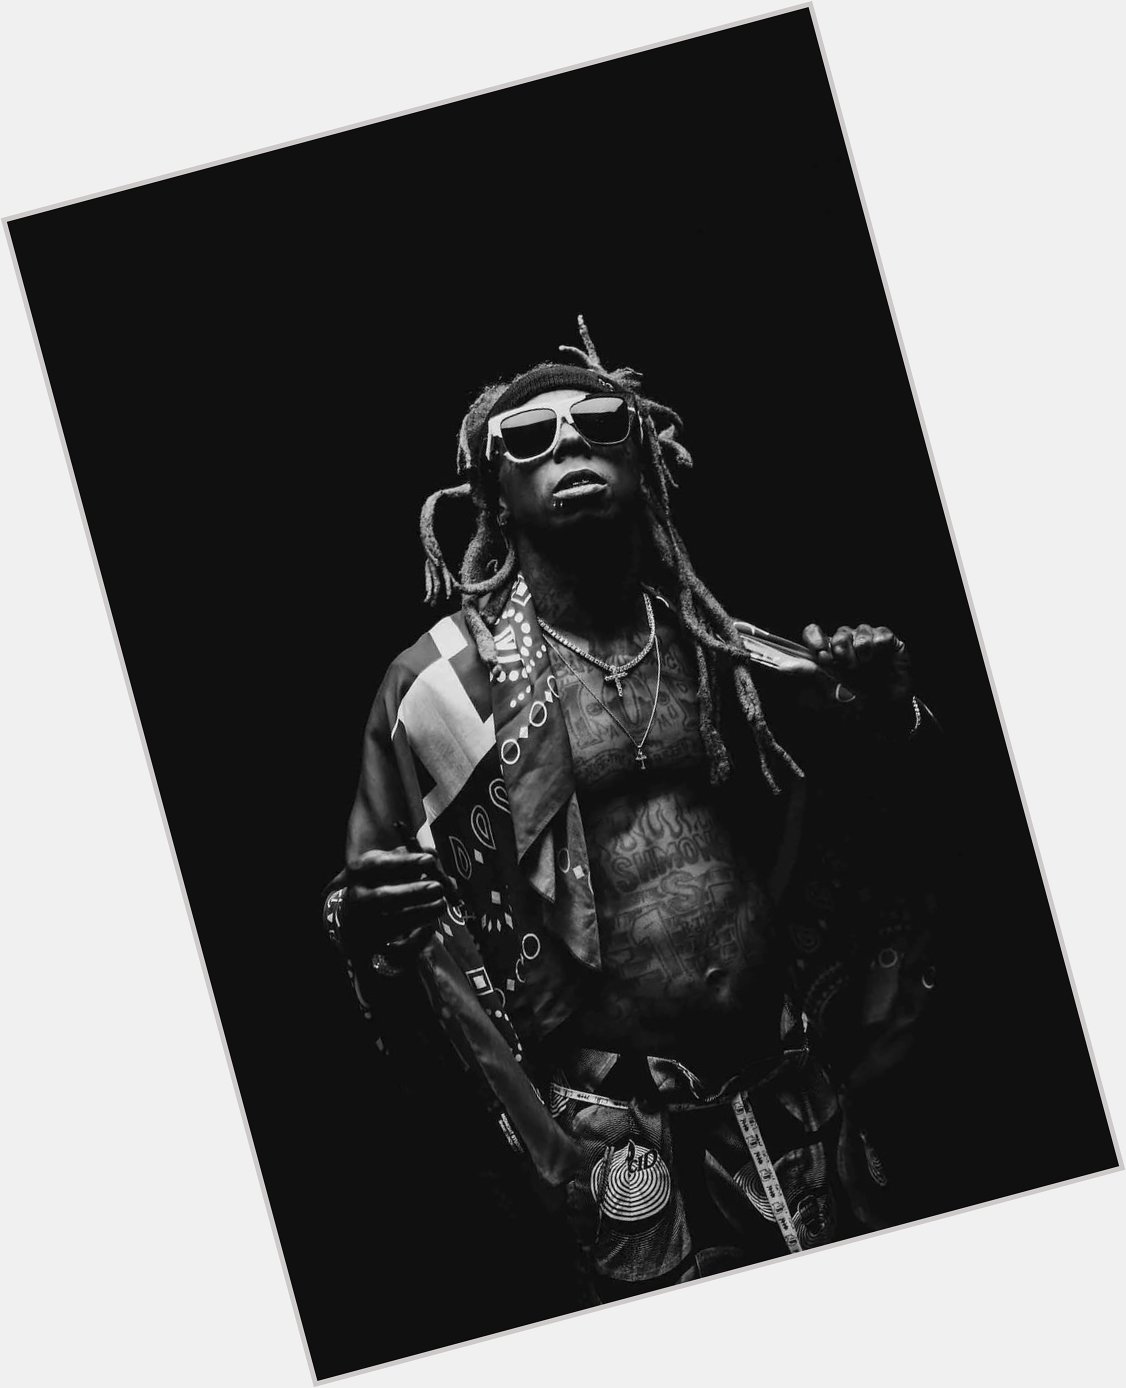 Happy birthday to the GOAT Lil Wayne. 